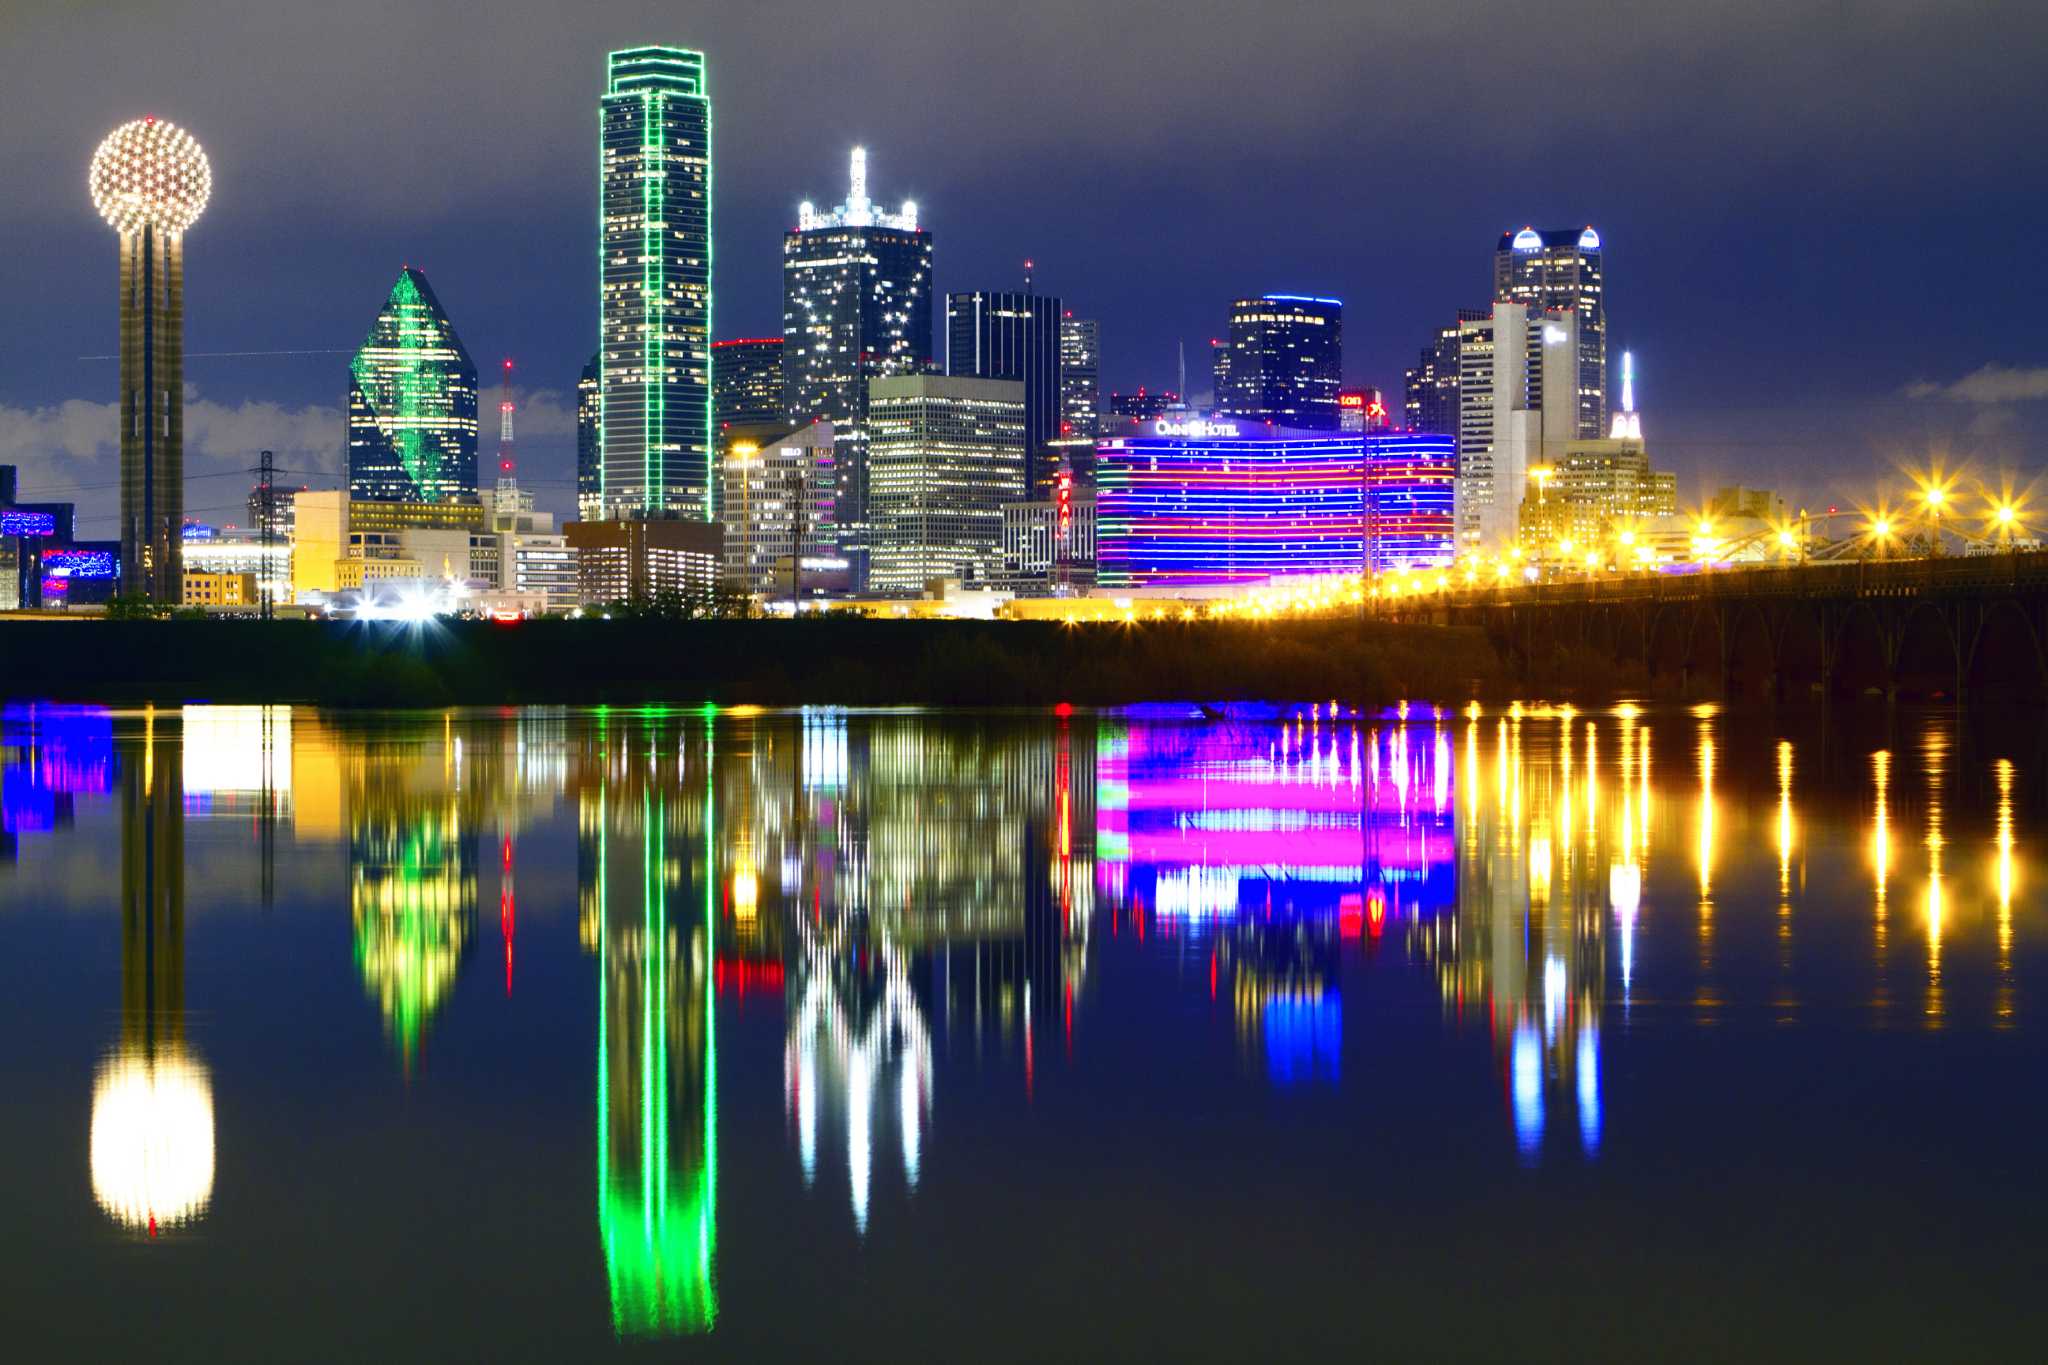 Dallas skyline wins 'Best International Skyline' by USA Today voters